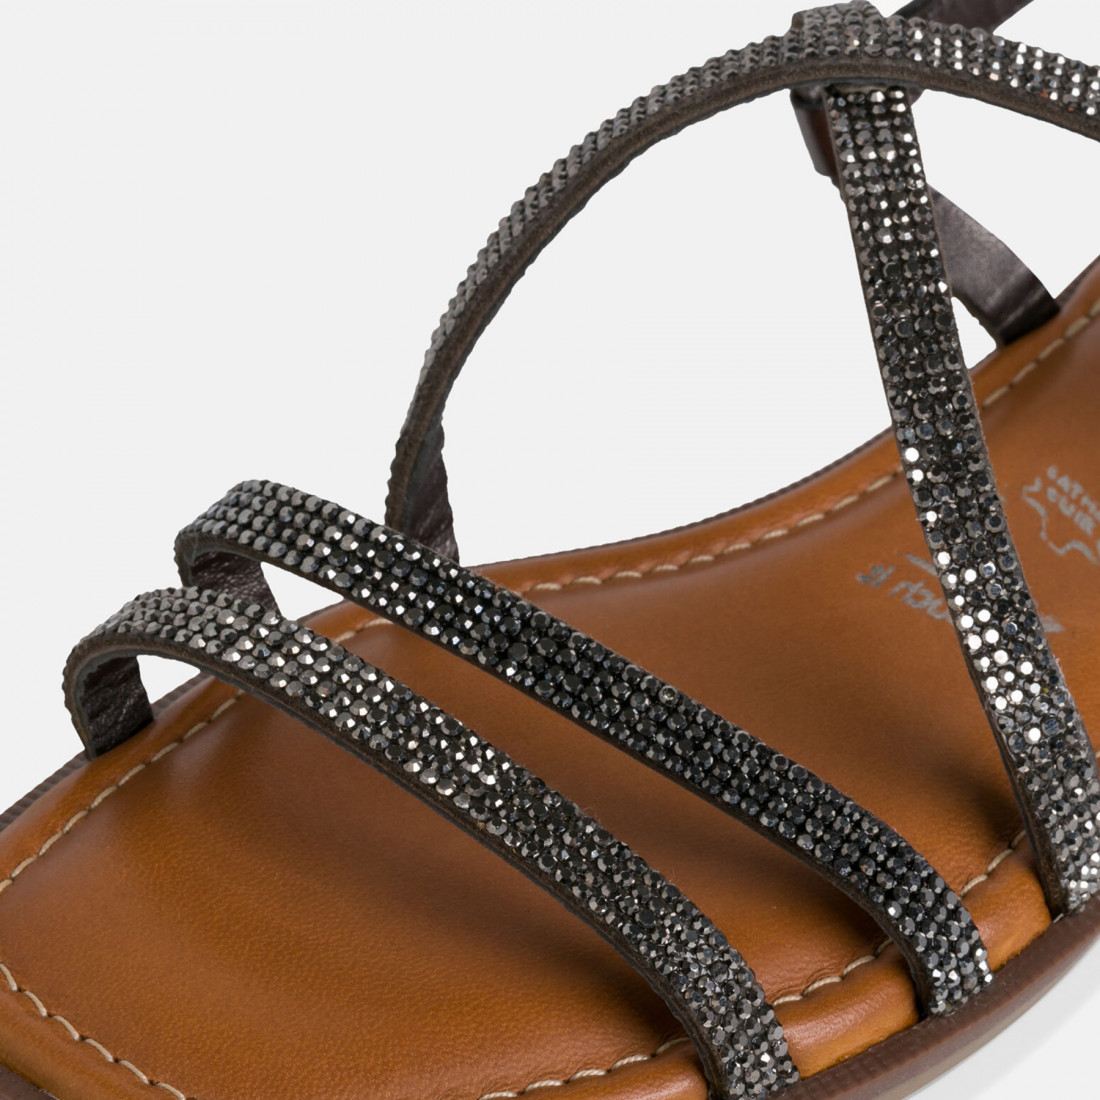 Tamaris women's sandal in dark silver leather with rhinestones